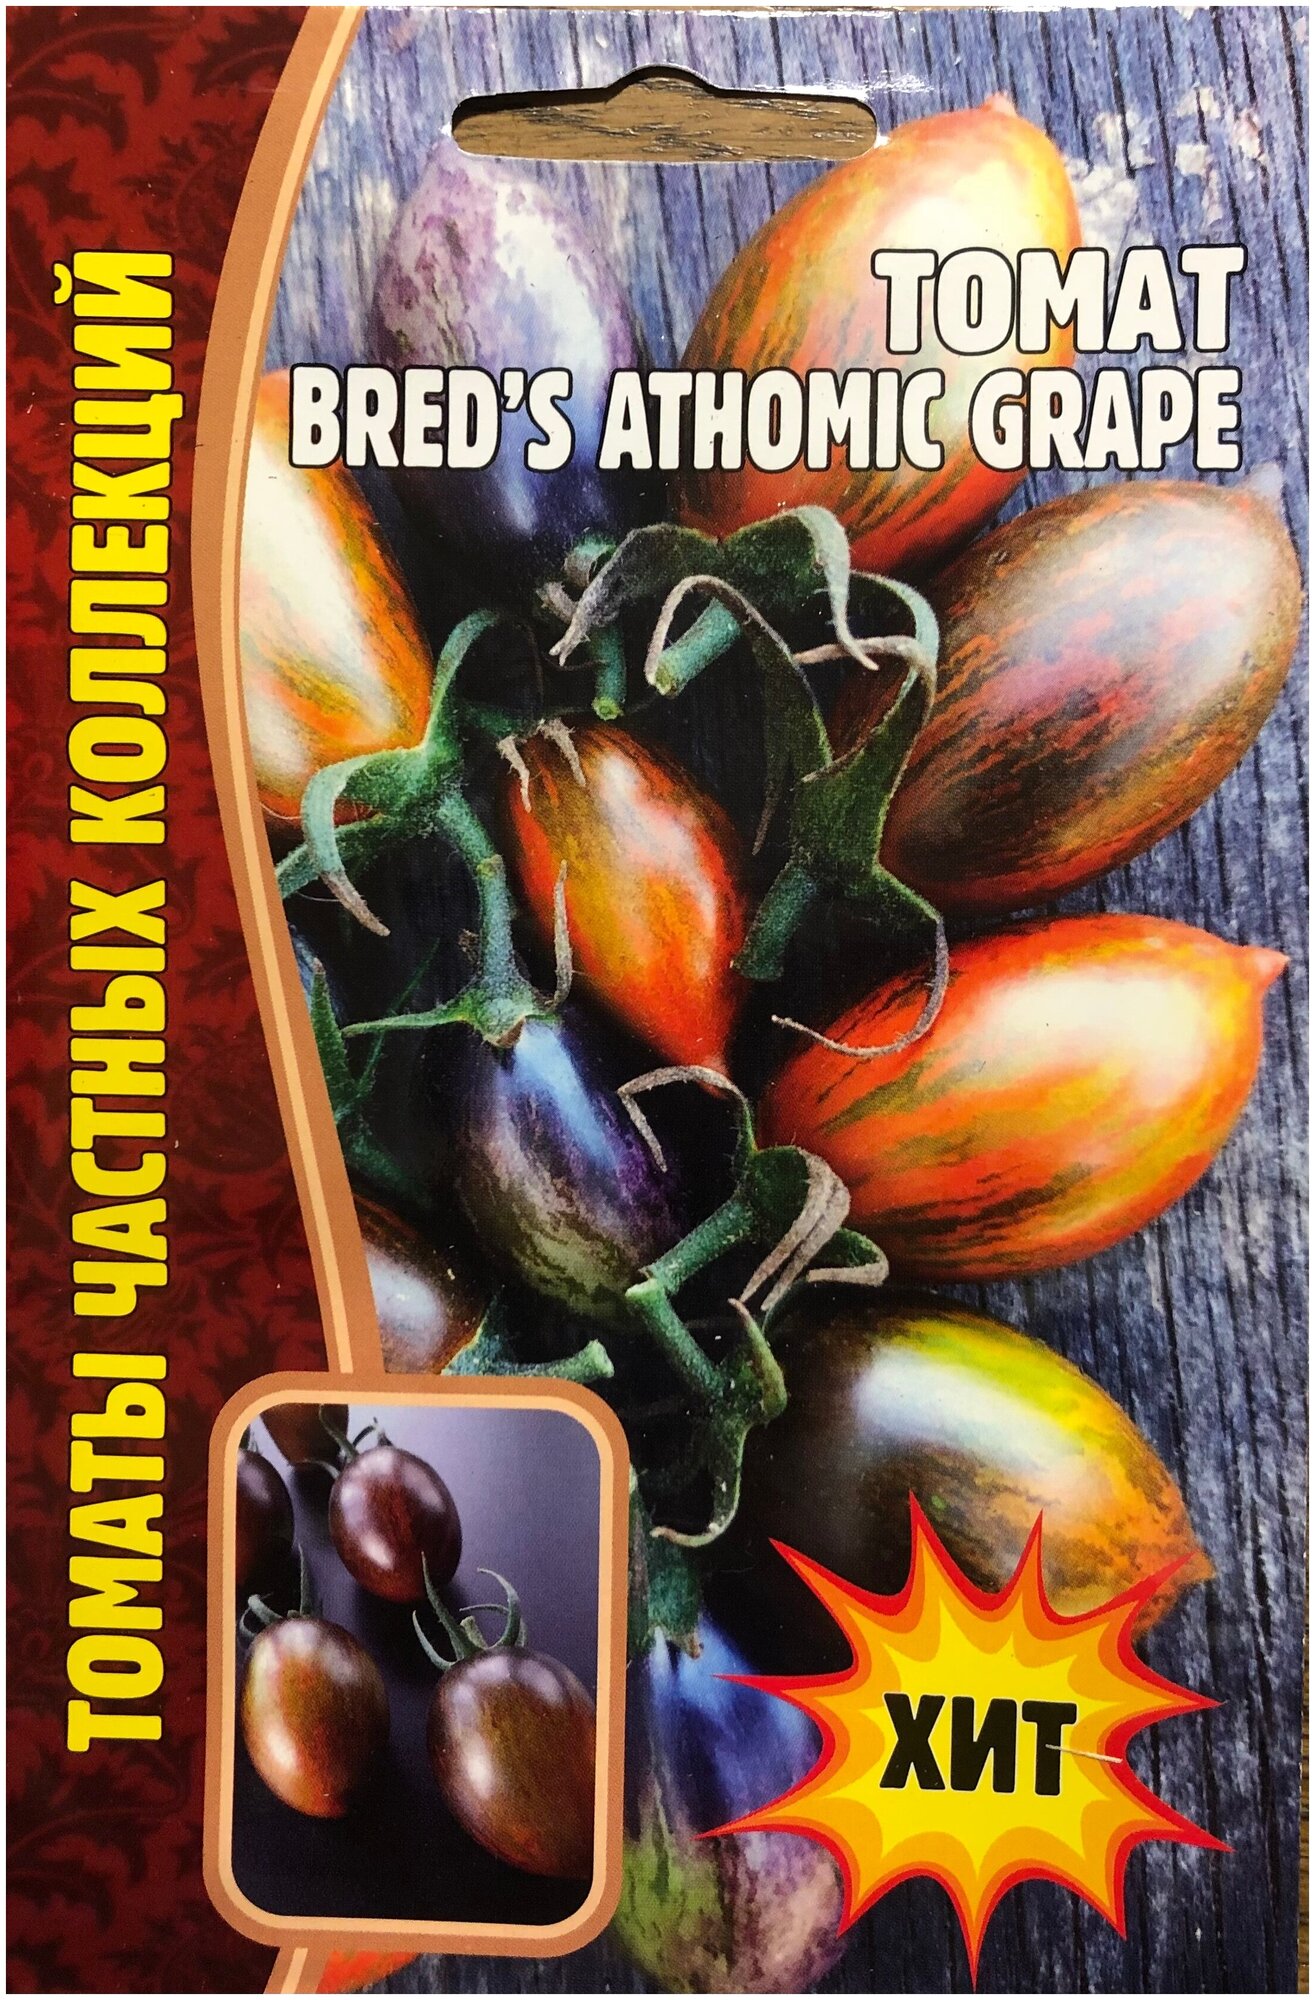 Семена Томата "Атомный виноград Брэда (Tomat Breds athomic grape) (5 семян)